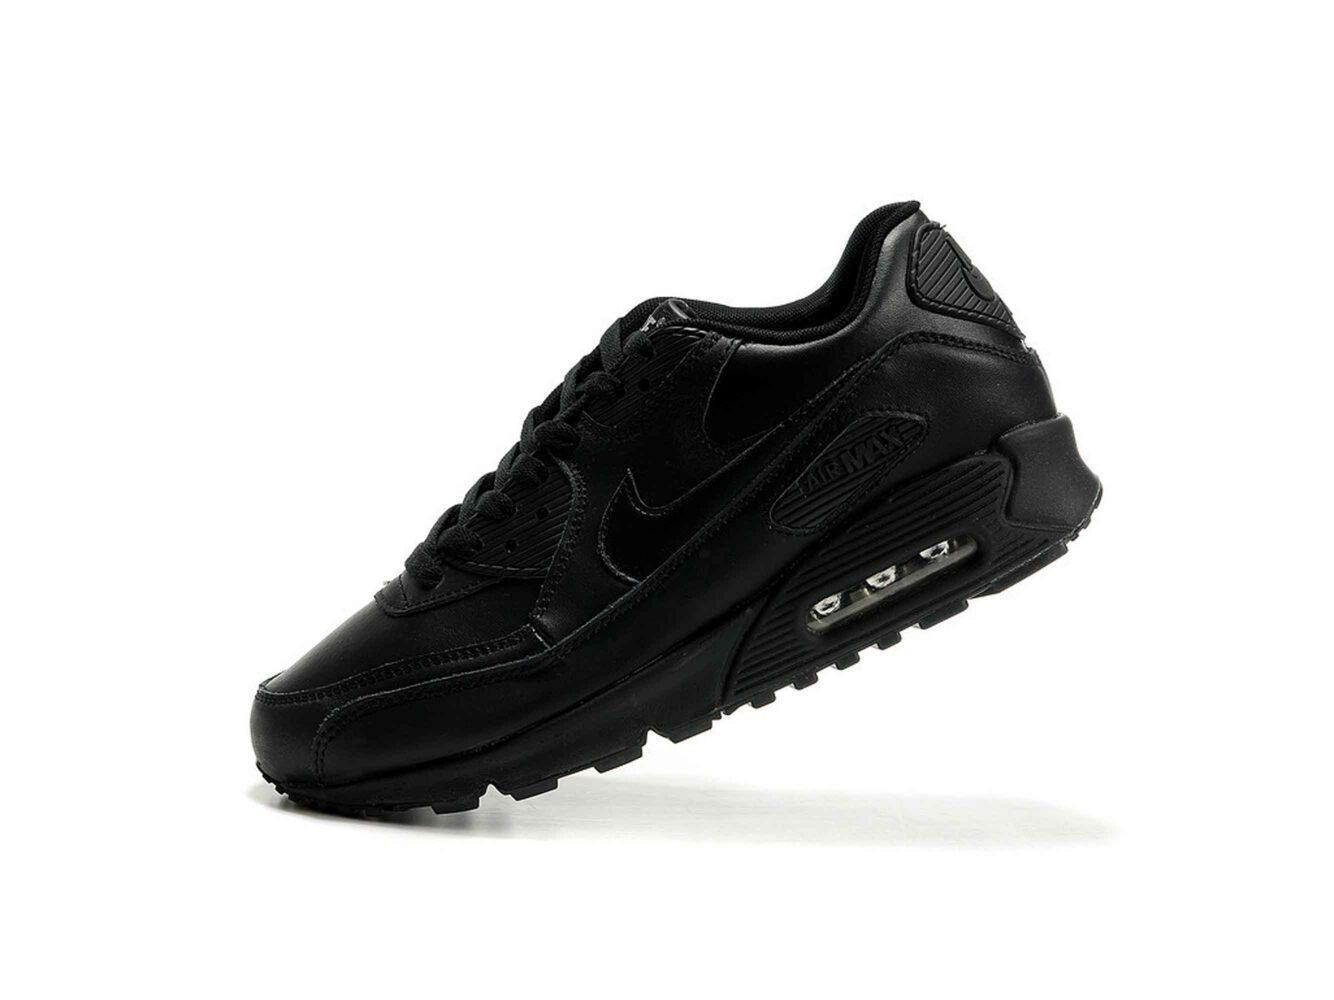 Nike Air Max 90 LTR Black Купить